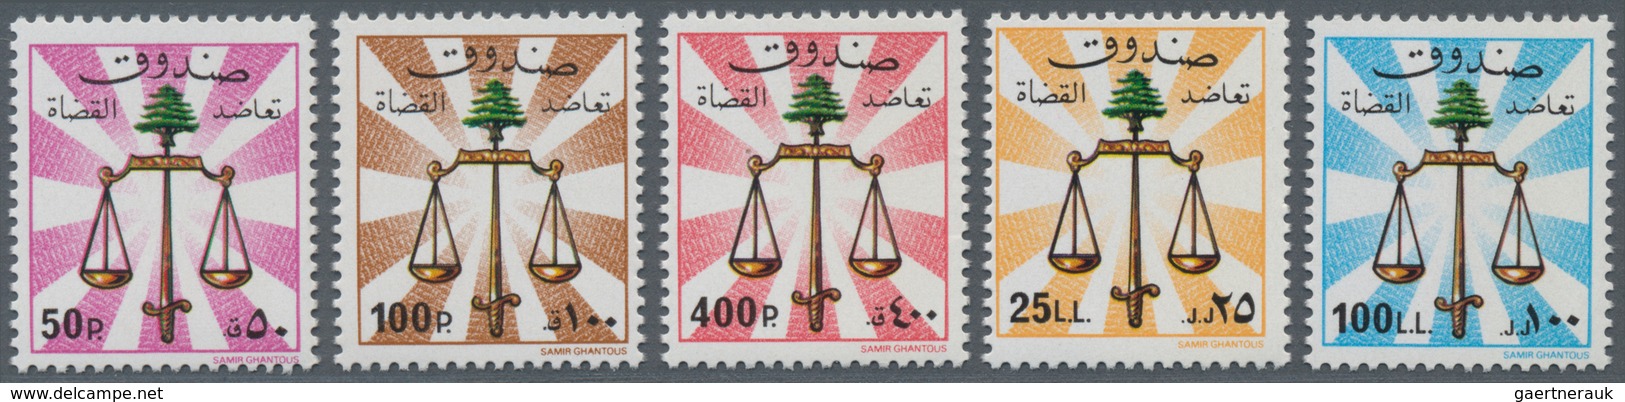 Libanon: 1980s, Judges Pension Revenues, 50p.-£100, Set Of Five Values, Mint Never Hinged. - Libanon